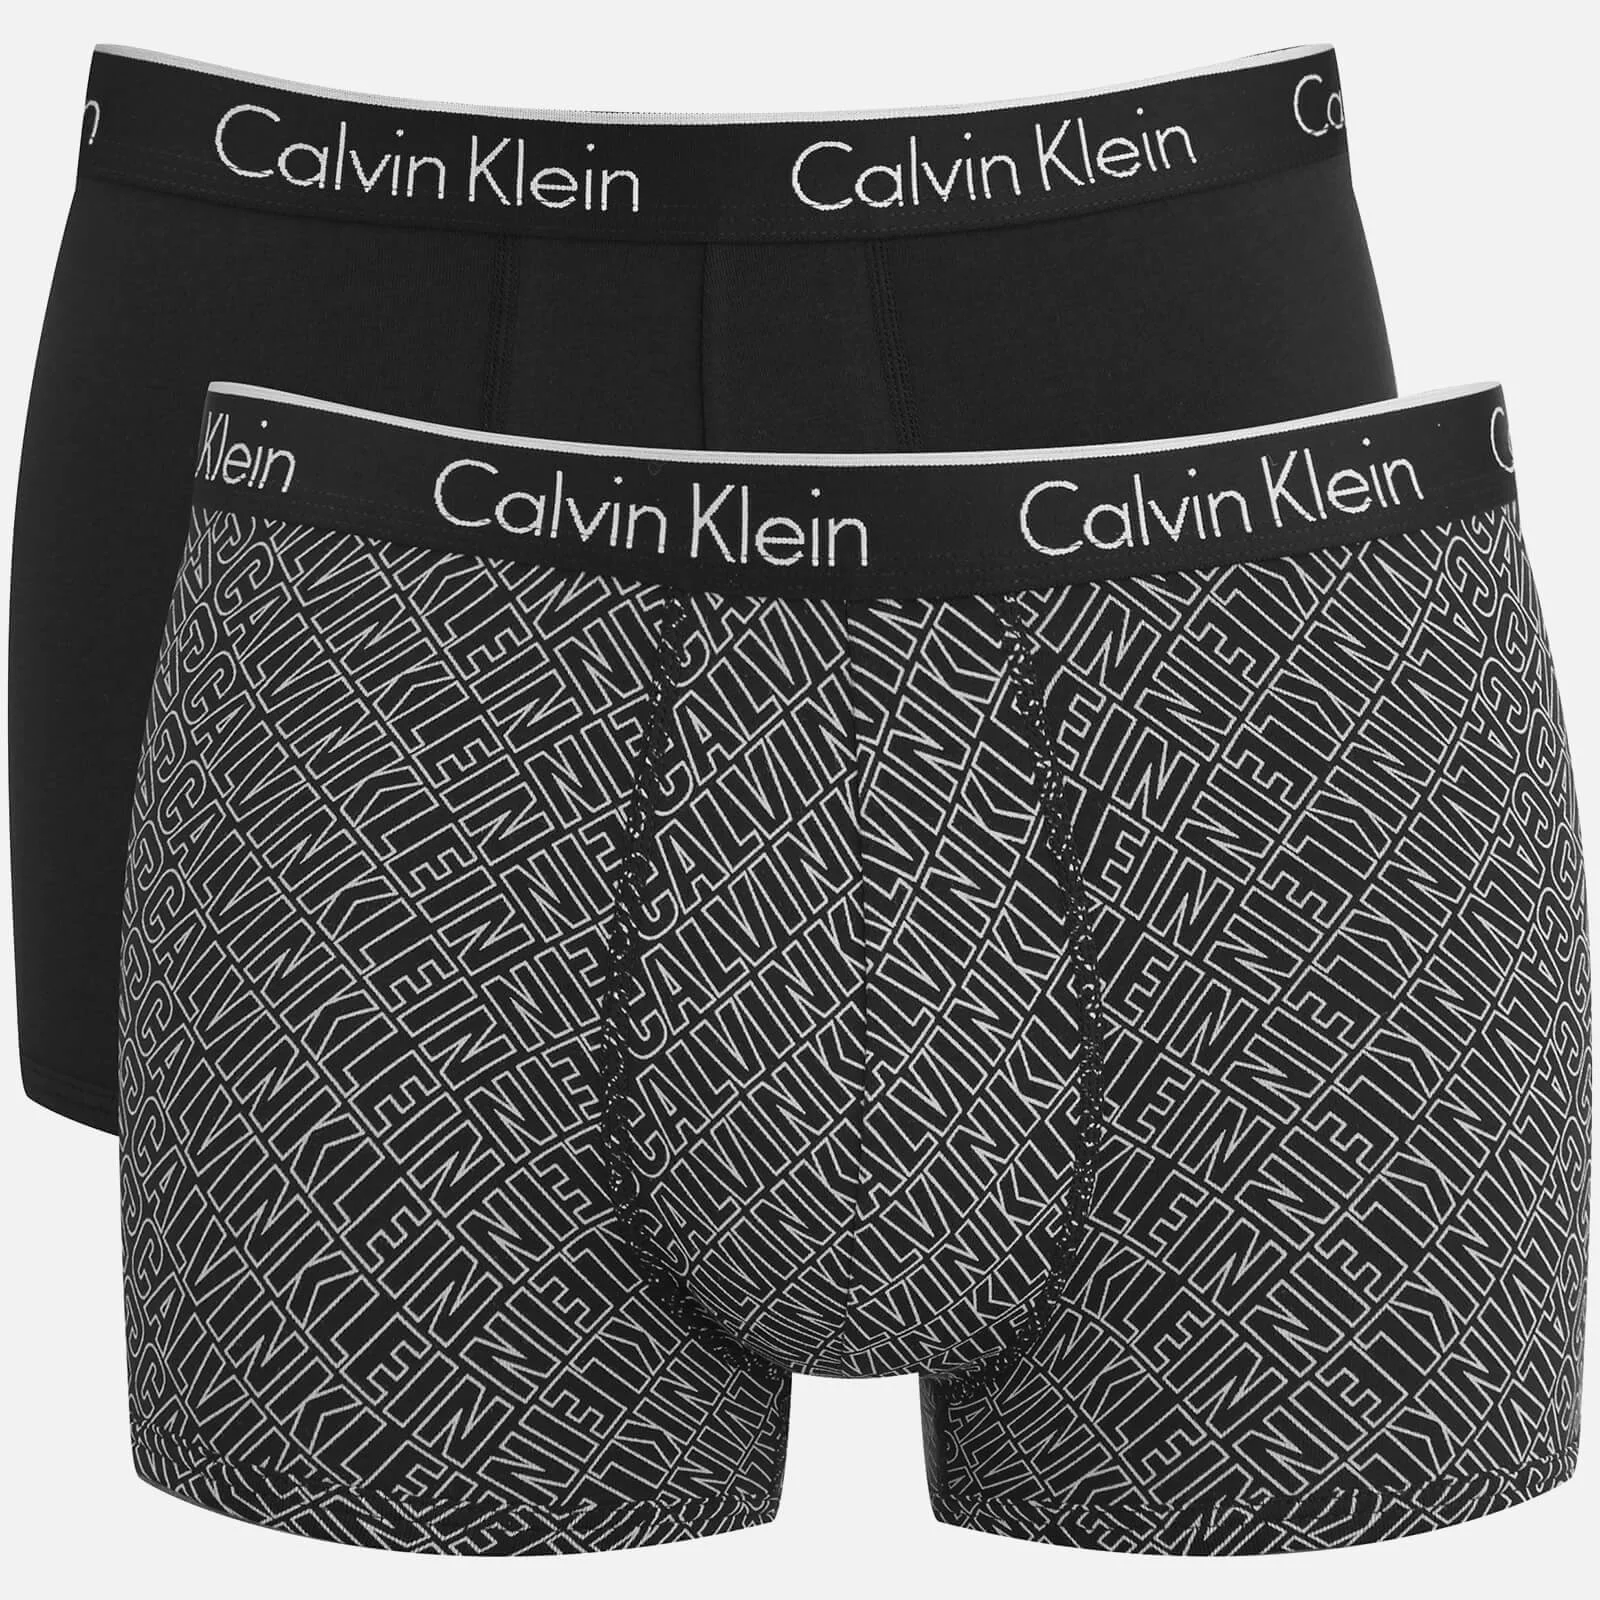 Calvin Klein Men's CK One Cotton 2 Pack Trunks - Chevron Logo B&W Black Image 1